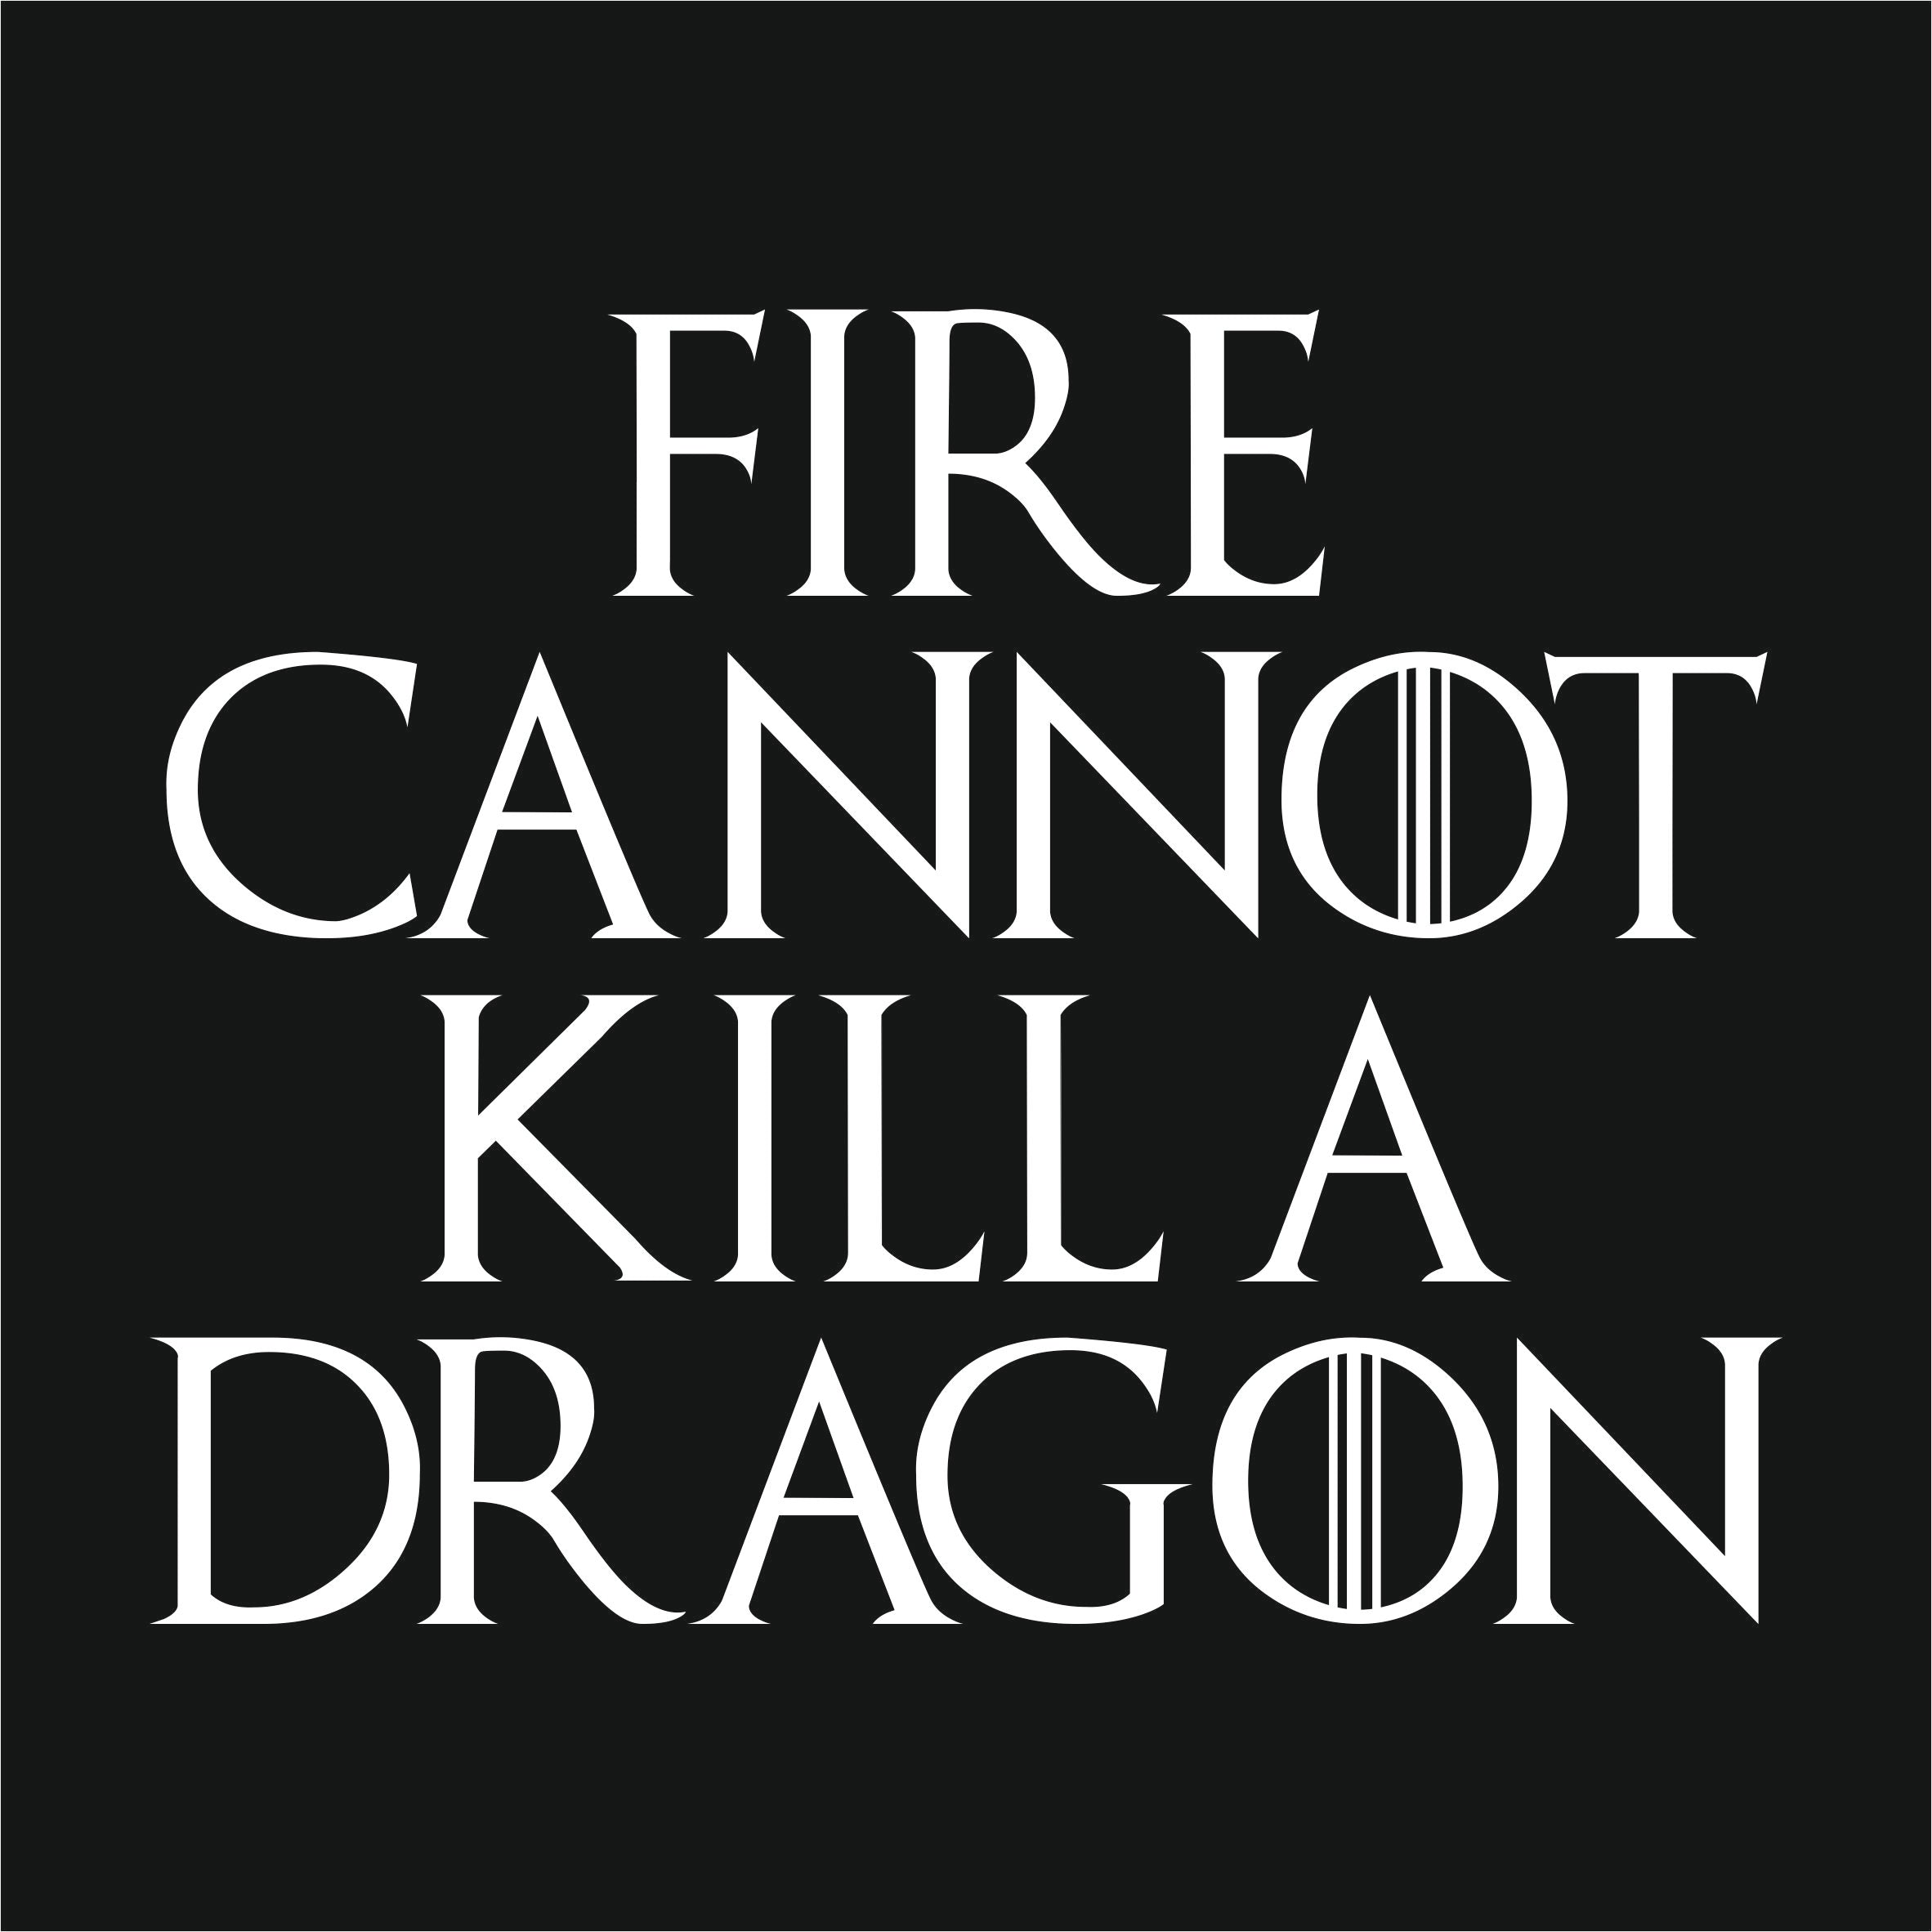 Fire Cannot Kill A Dragon GOT Reactr Tshirts For Men - Eyewearlabs